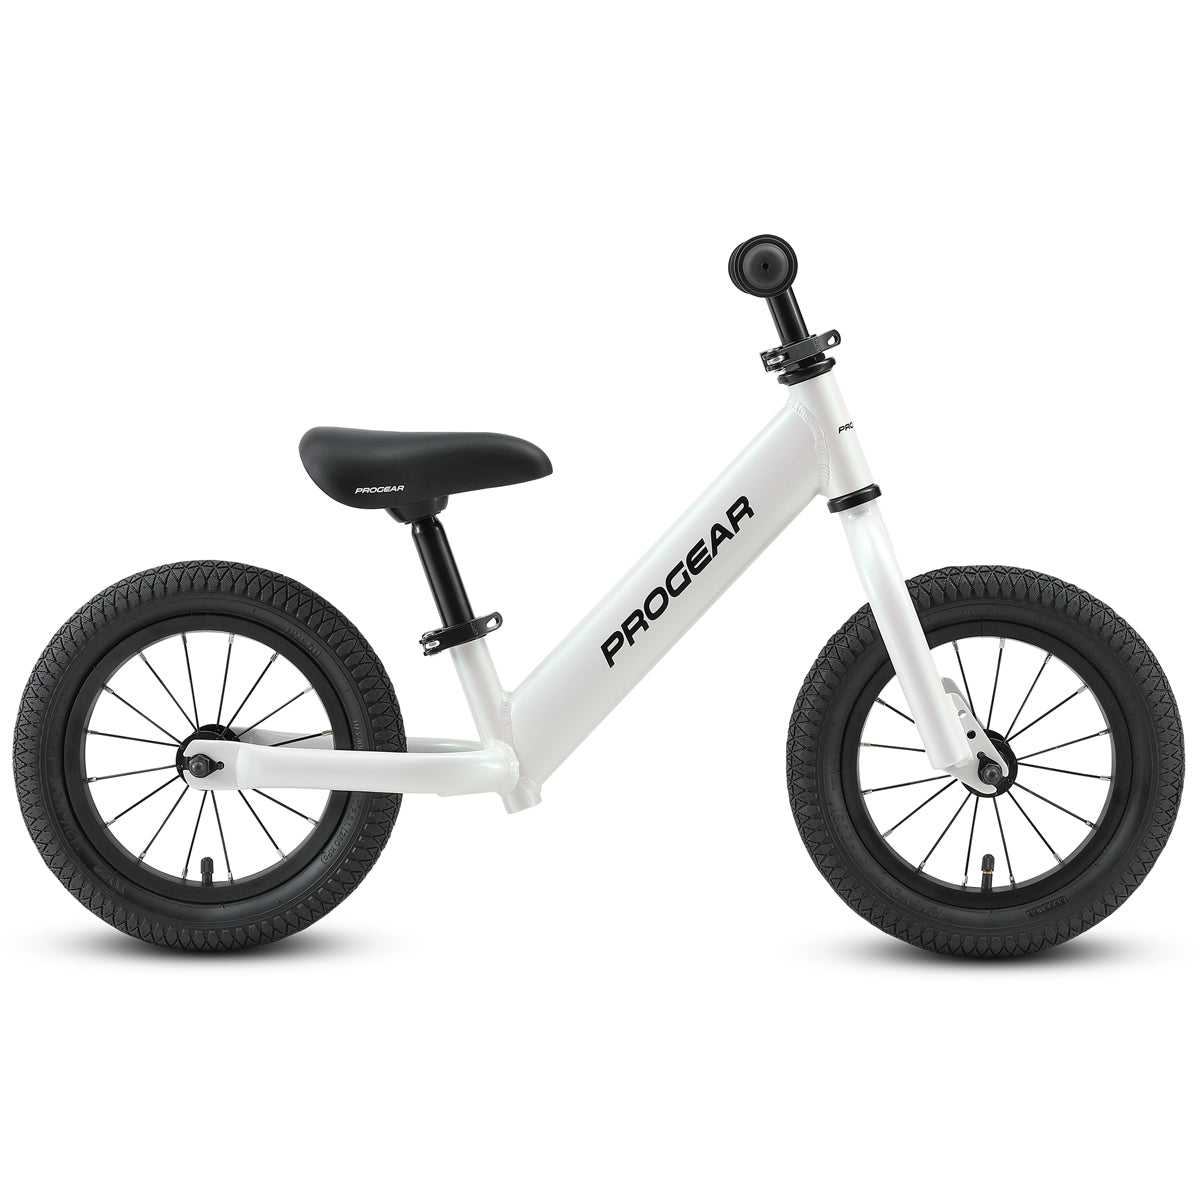 DuraLite Kids Balance Bike 12" - Pearl White